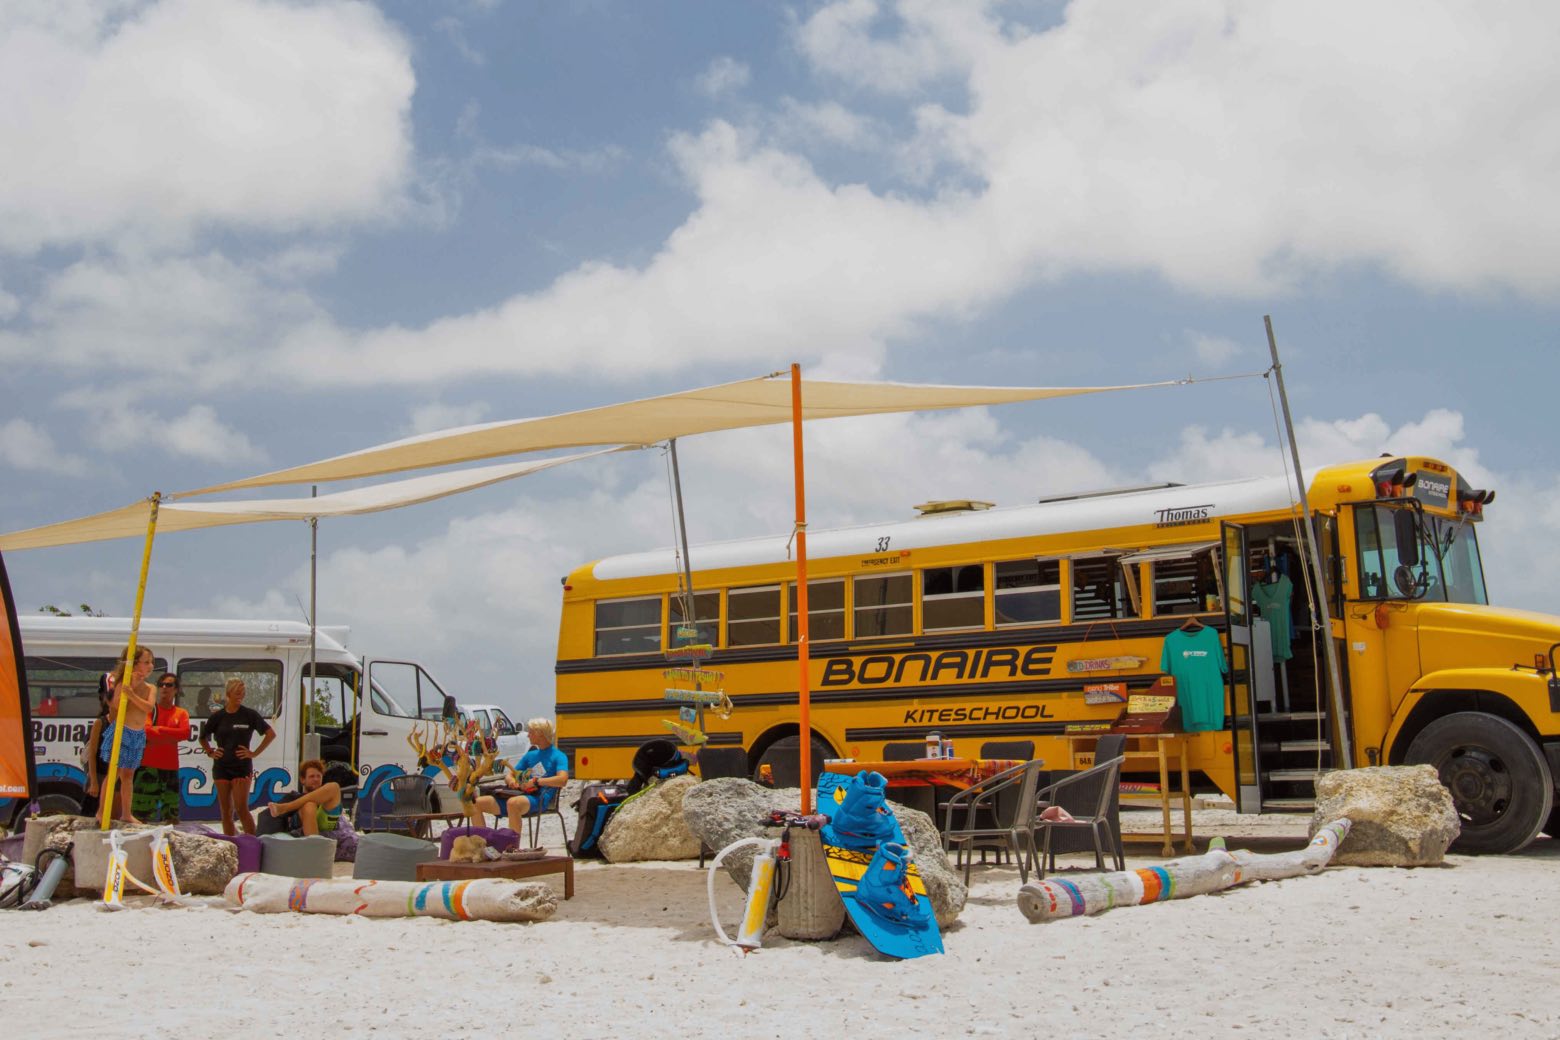 Image of the yellow bus of Bonaire Kiteschool at atlantis KiteBeach Bonaire